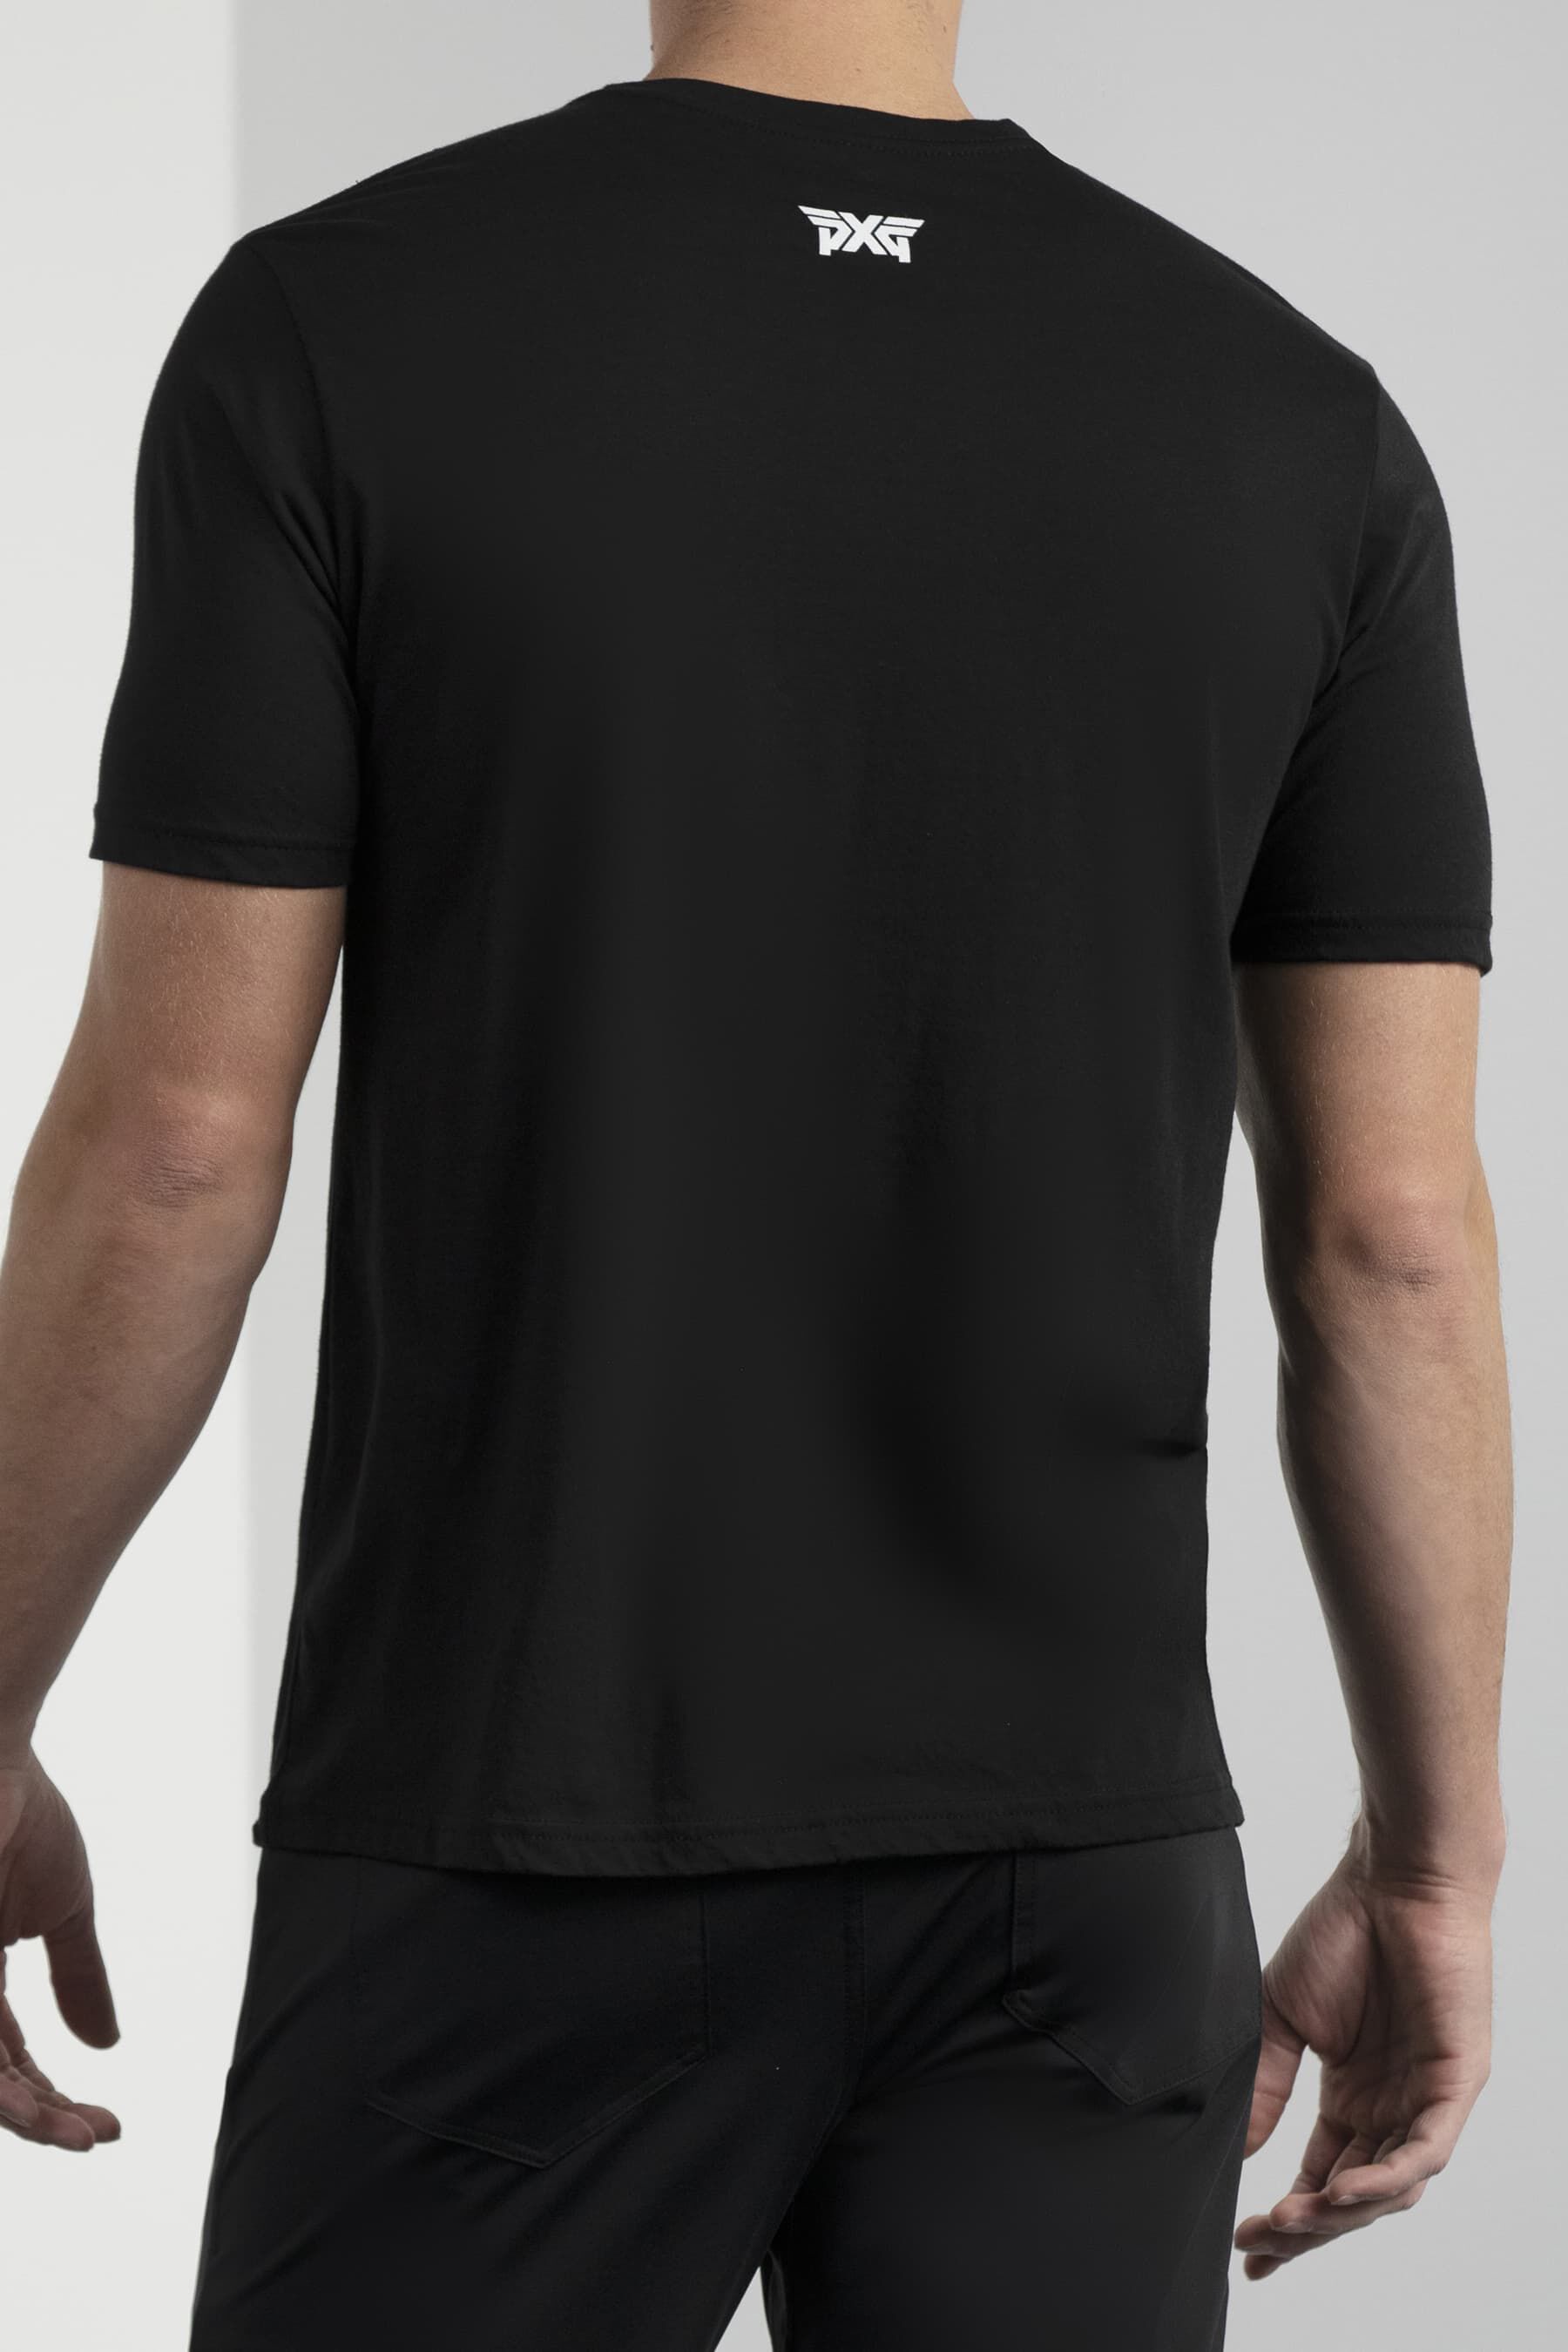 Shop Men's Golf T-Shirts - Long and Short Sleeve | PXG